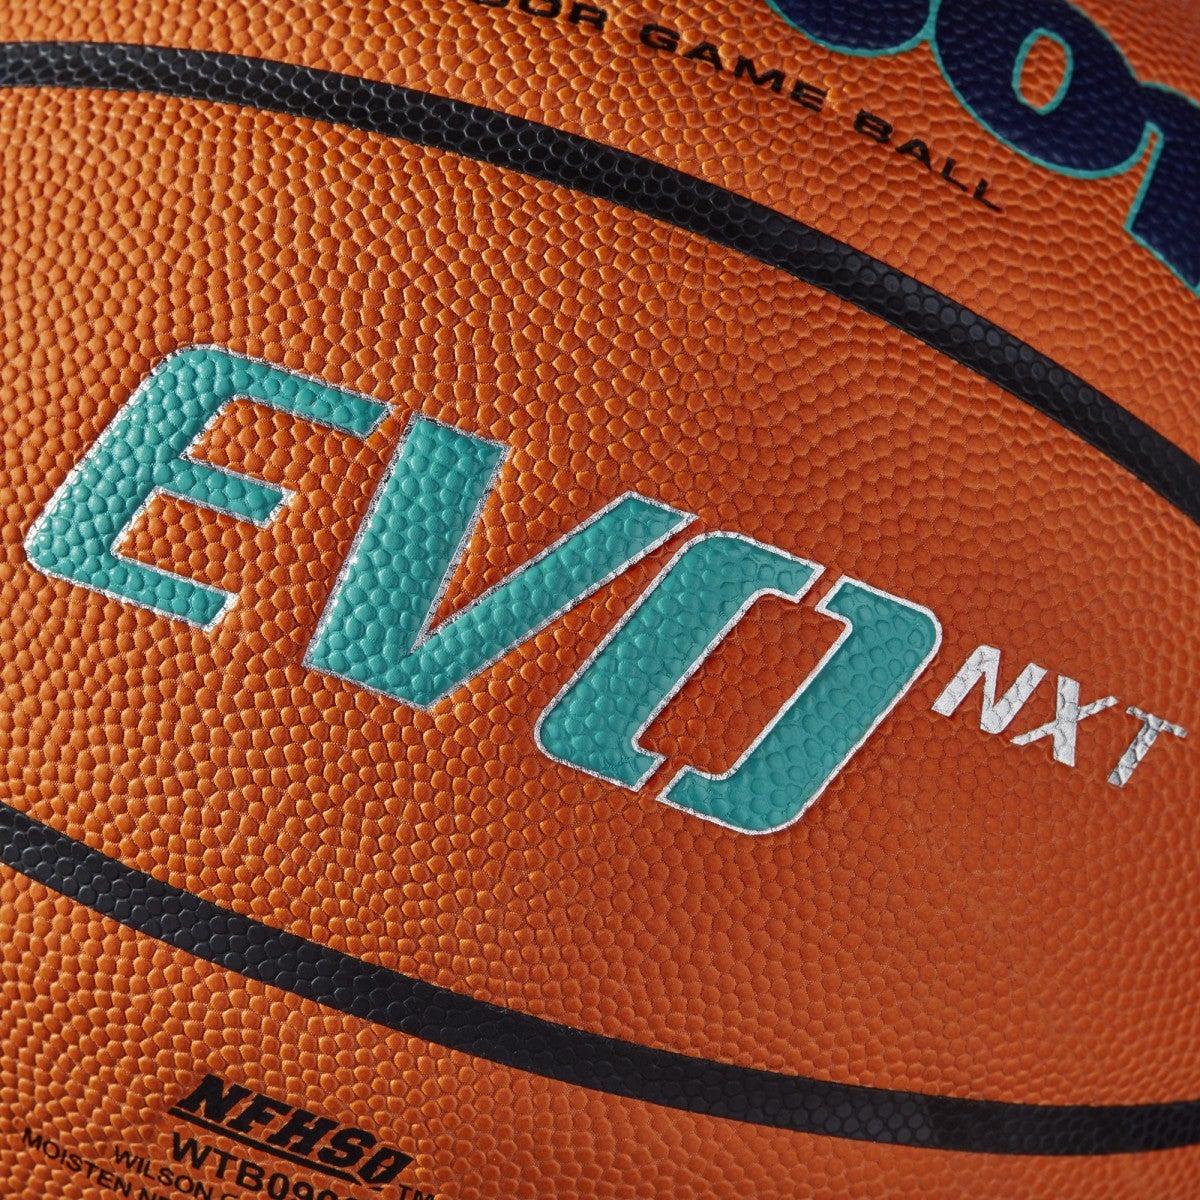 Ballons de basket EVO Next Champions League